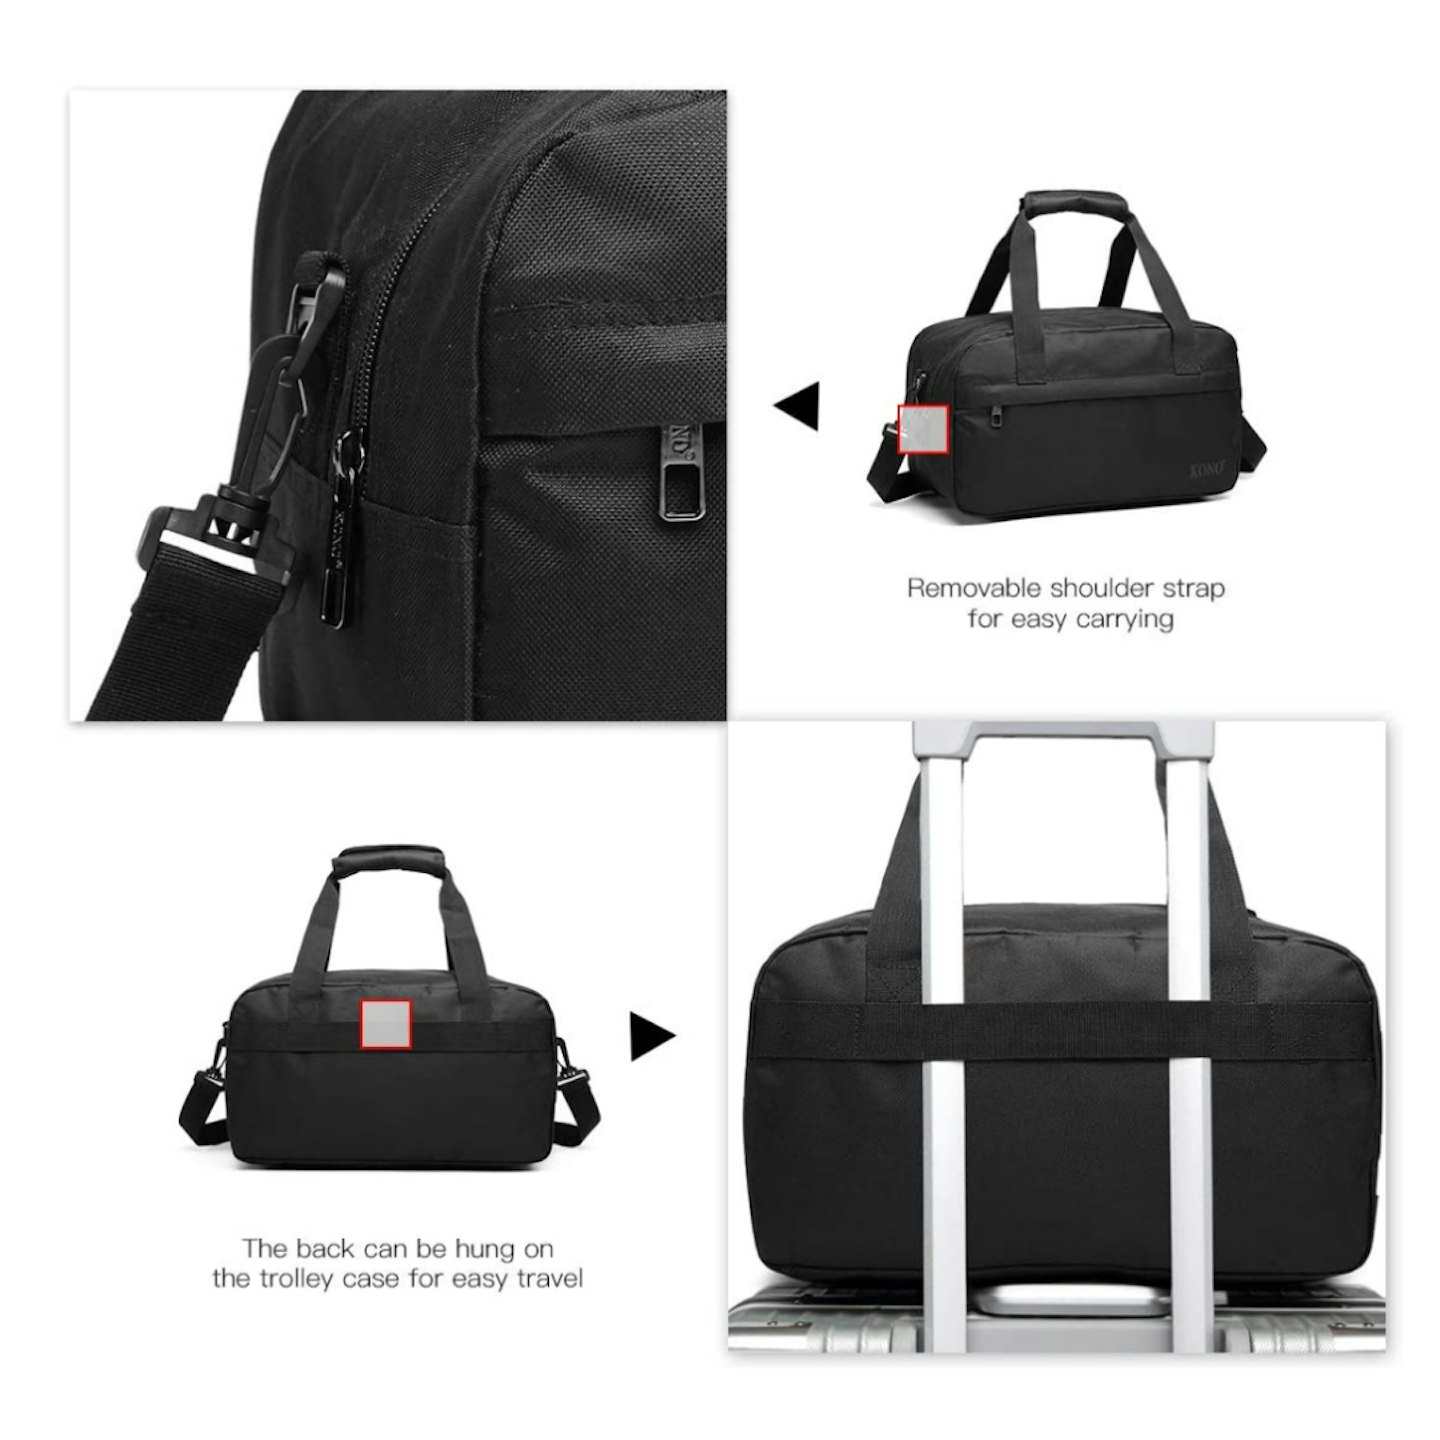 kono-store-amazon-under-seat-luggage-bag-tiktok-viral-closer-online-3